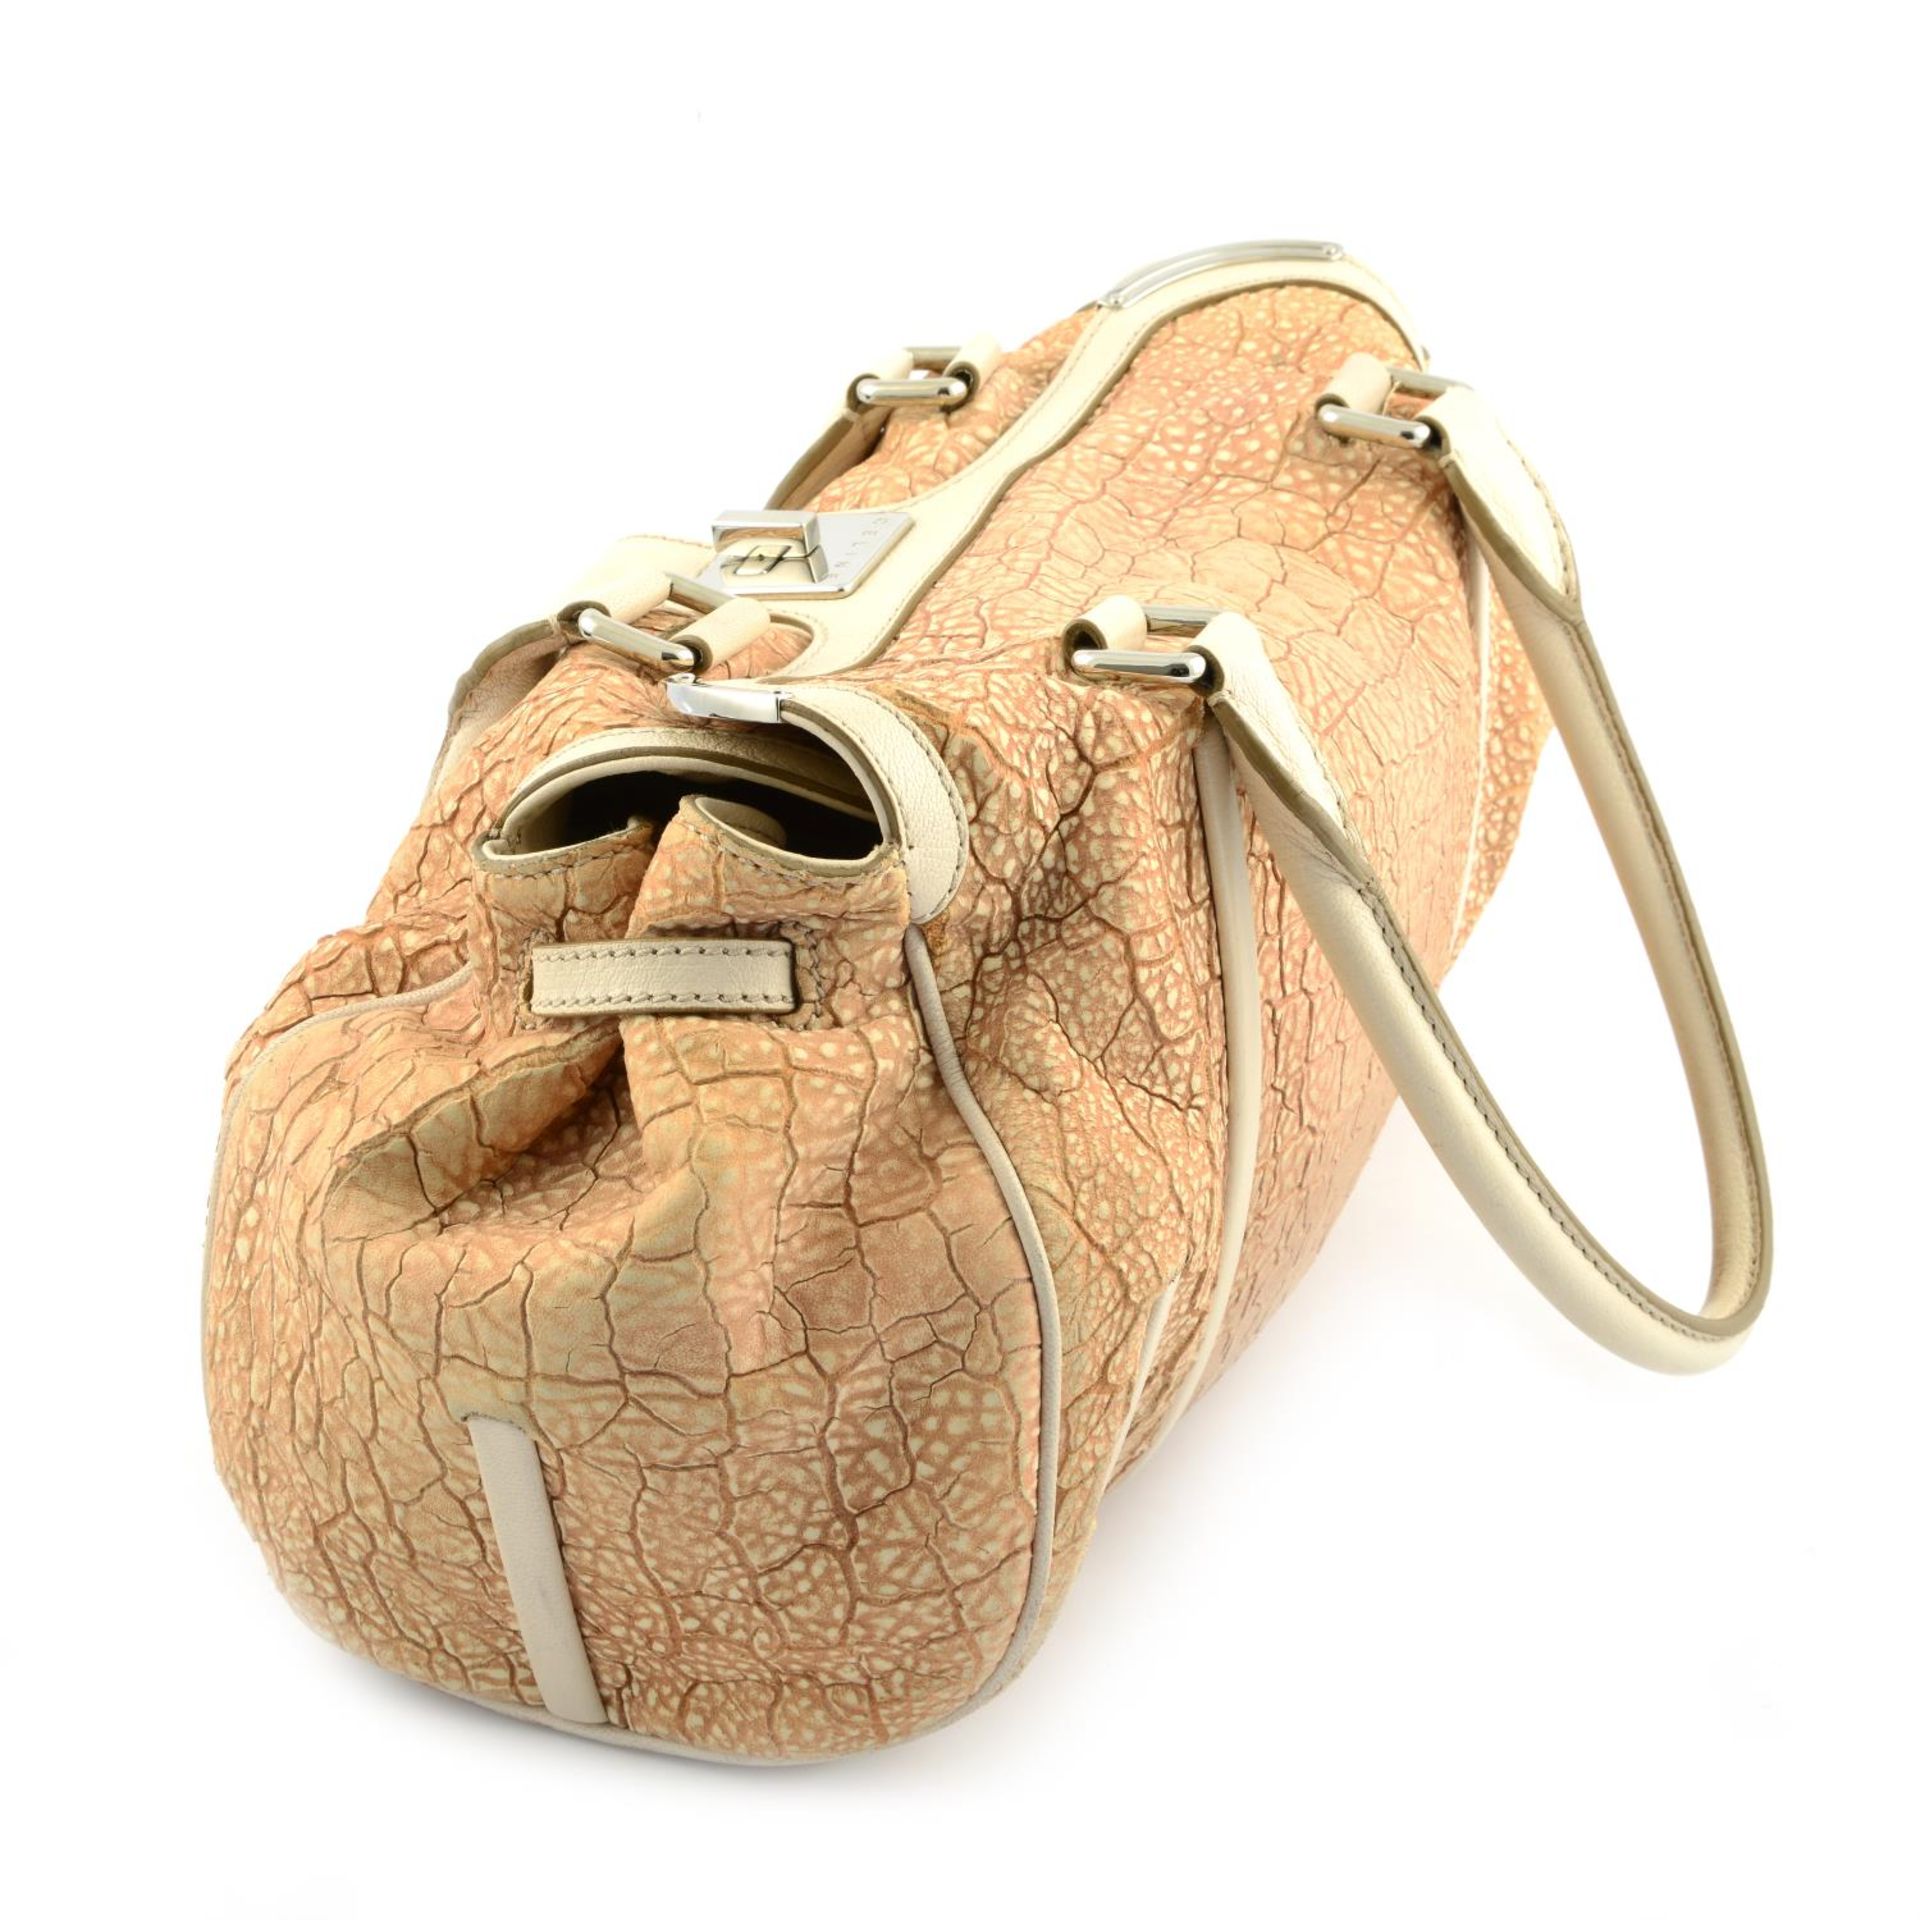 CÉLINE - a textured leather handbag. - Bild 3 aus 9